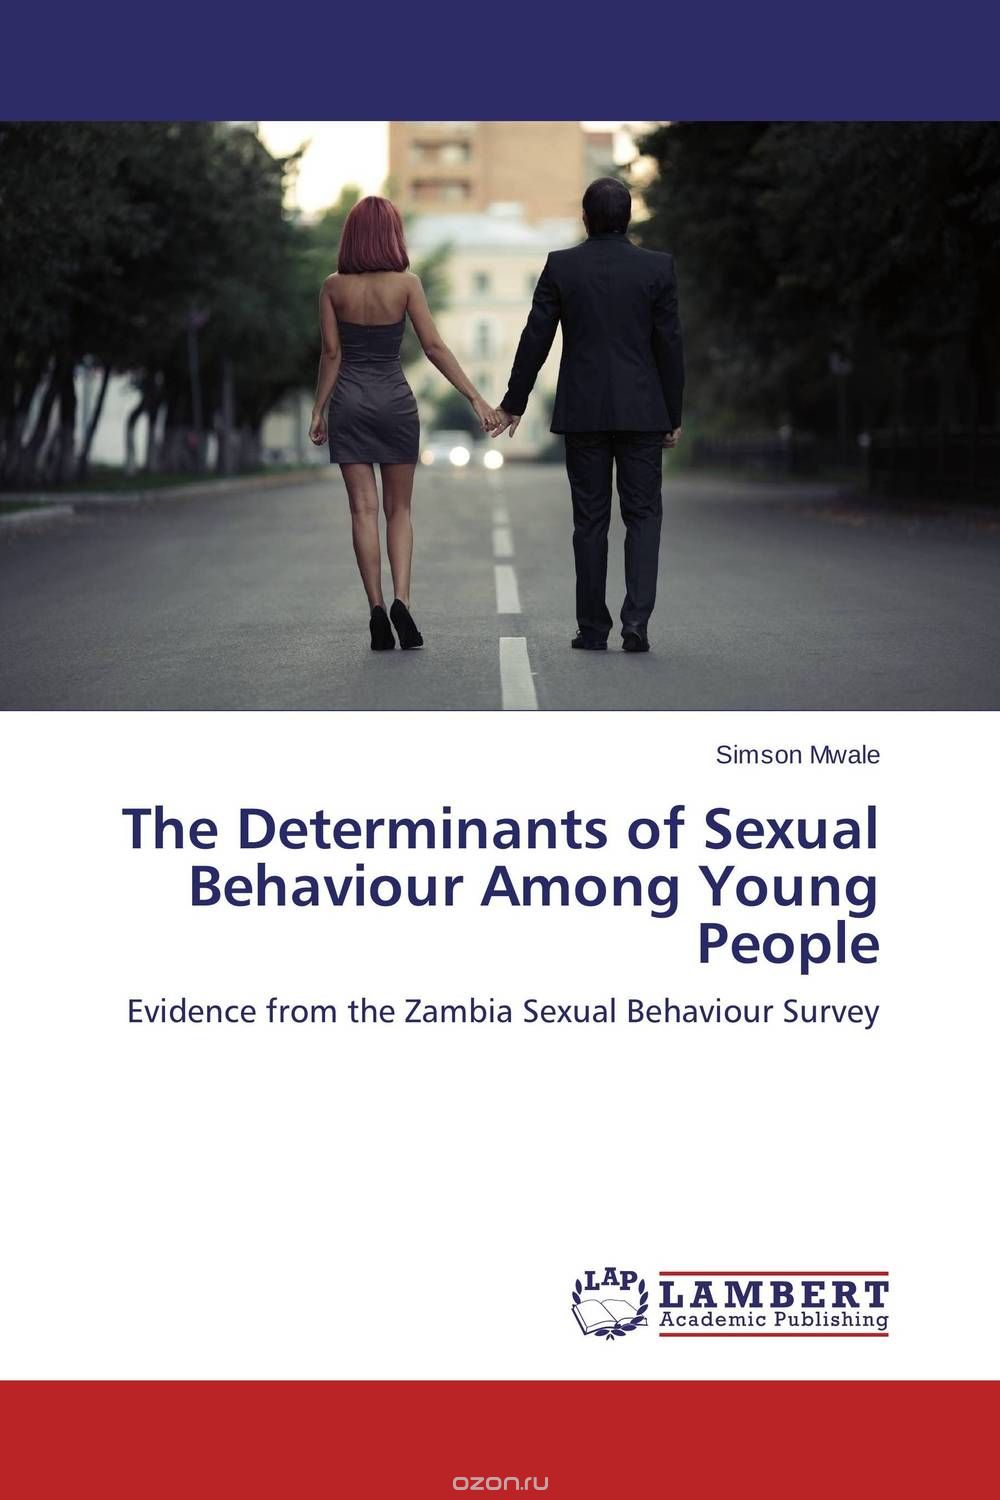 Скачать книгу "The Determinants of Sexual Behaviour Among Young People"